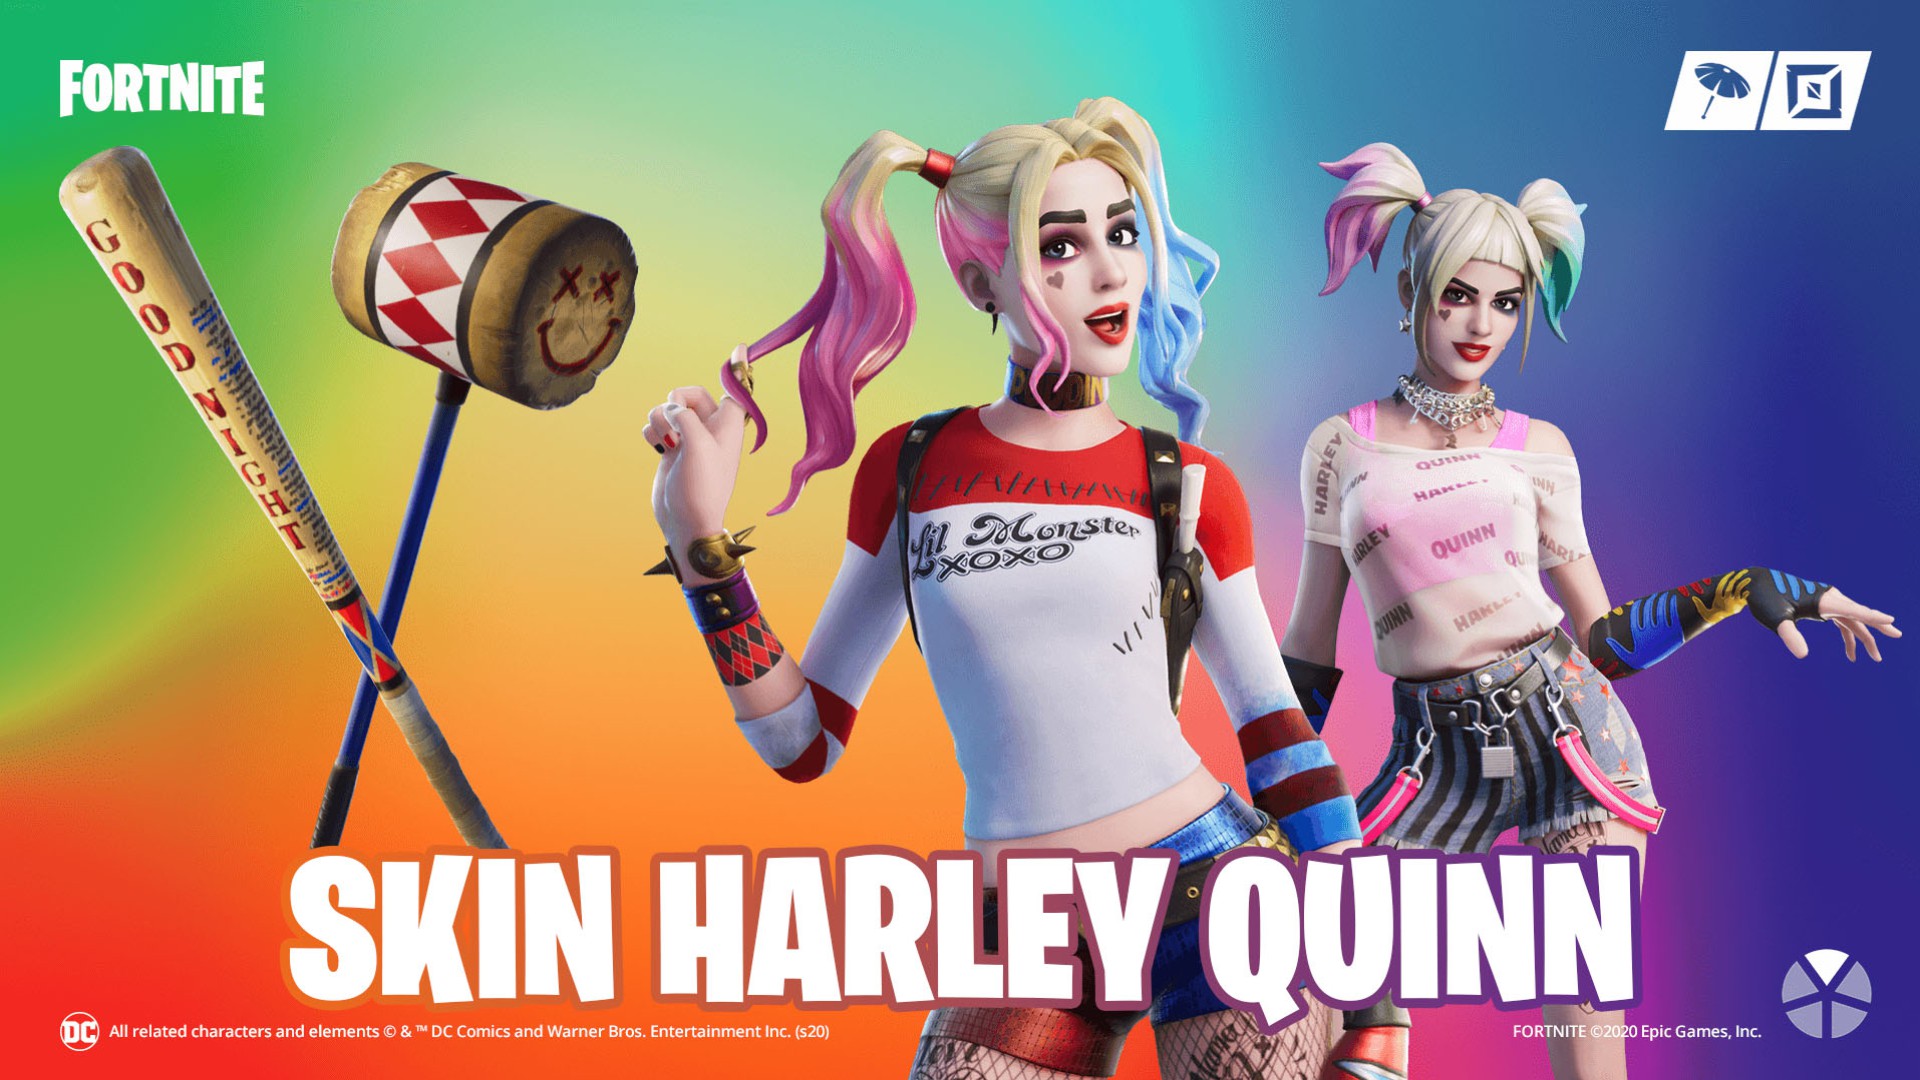 How Much Is The Harley Quinn Skin Fortnite Fortnite Ya Disponible El Skin De Harley Quinn En La Tienda Meristation